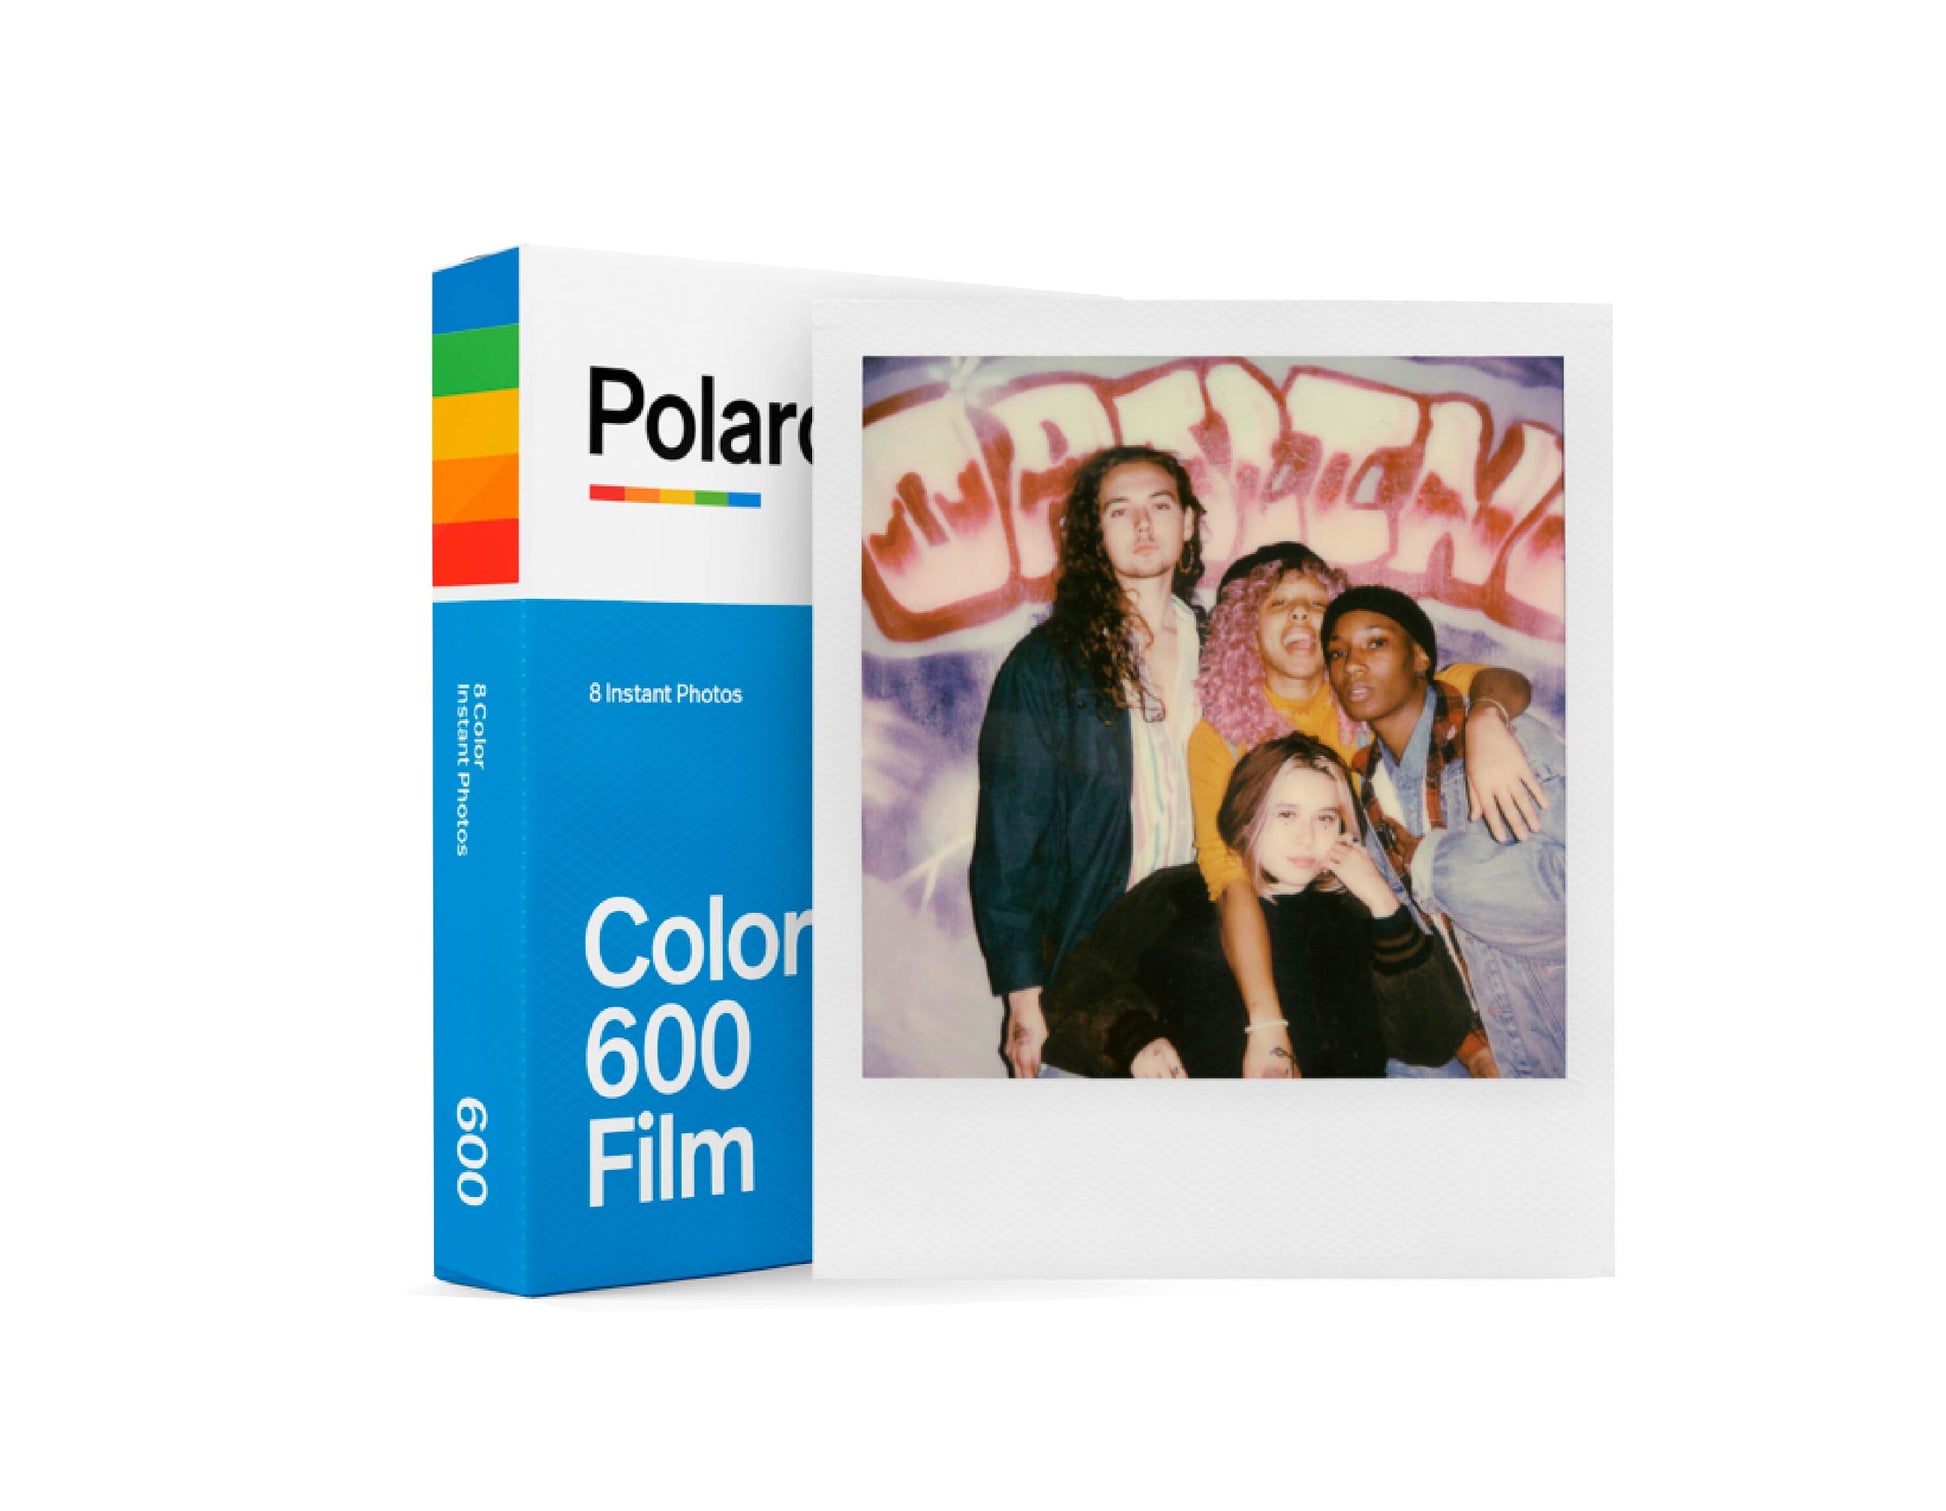 Polaroid OneStep 600, Polaroid 600, Instant Film, Camera Rainbow, Vintage Camera, Instant camera, Gift for photograph, Birthday gift - Vintage Polaroid Instant Cameras